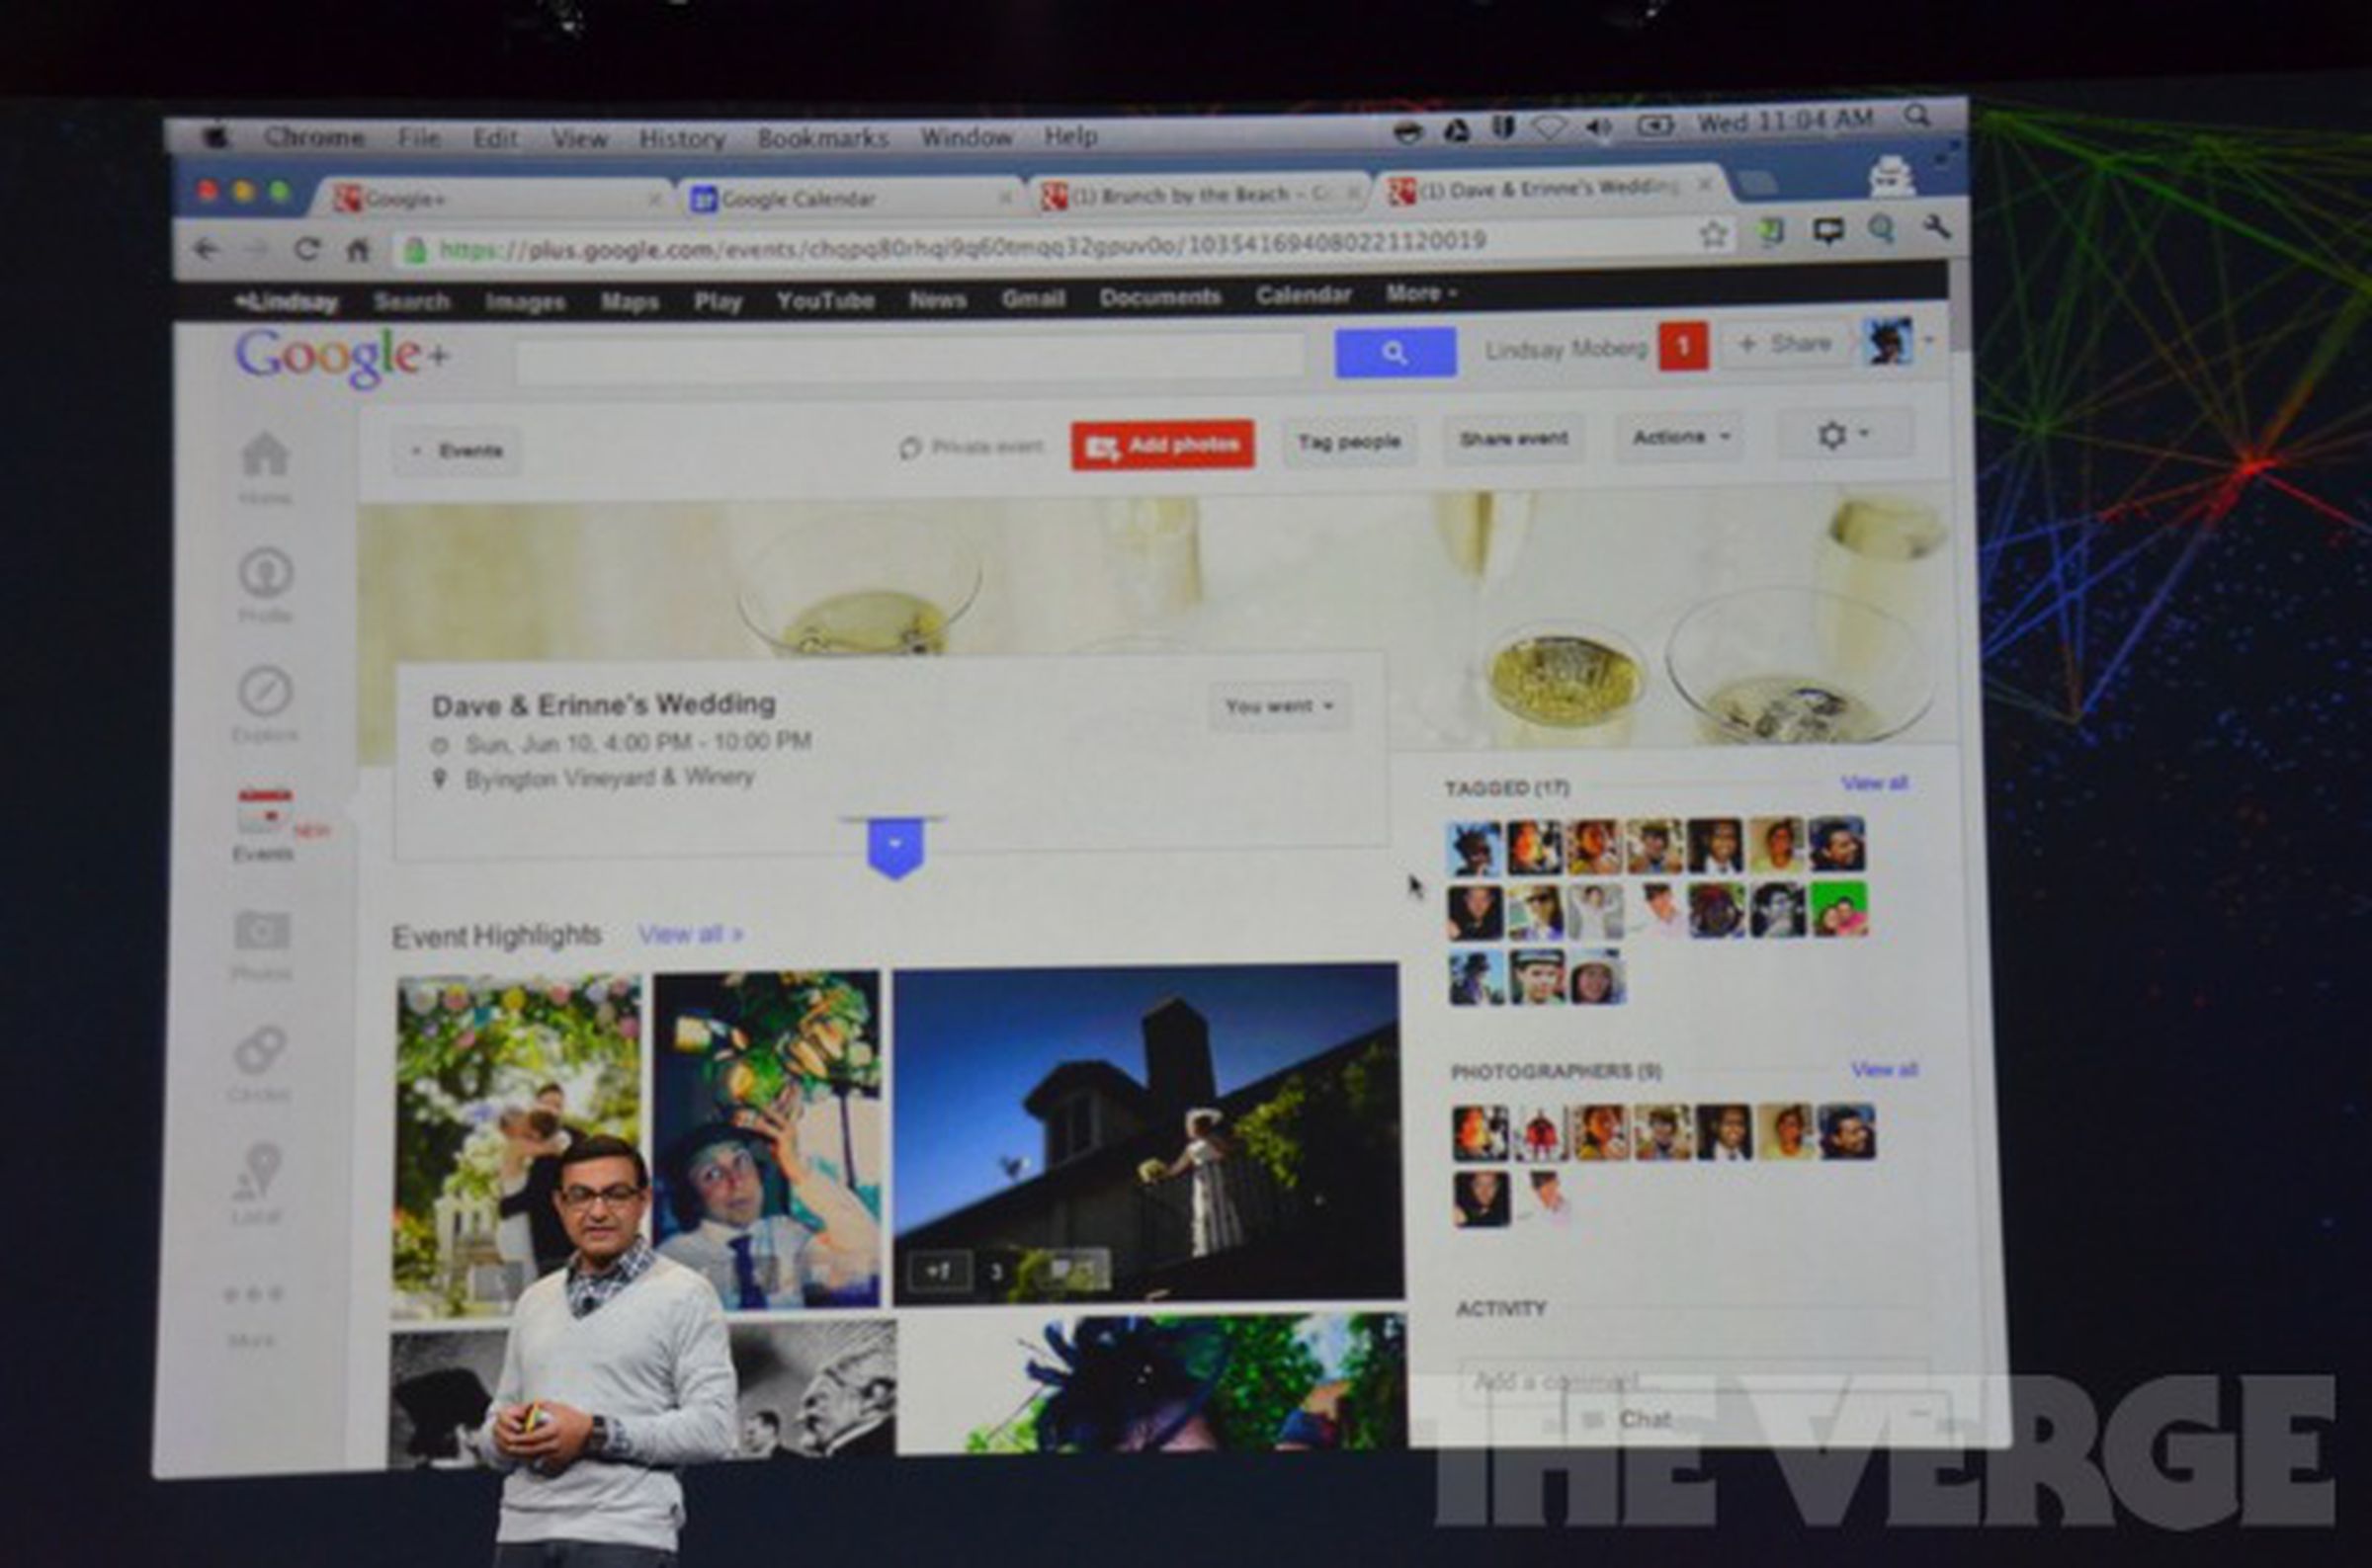 Google Plus Events liveblog photos